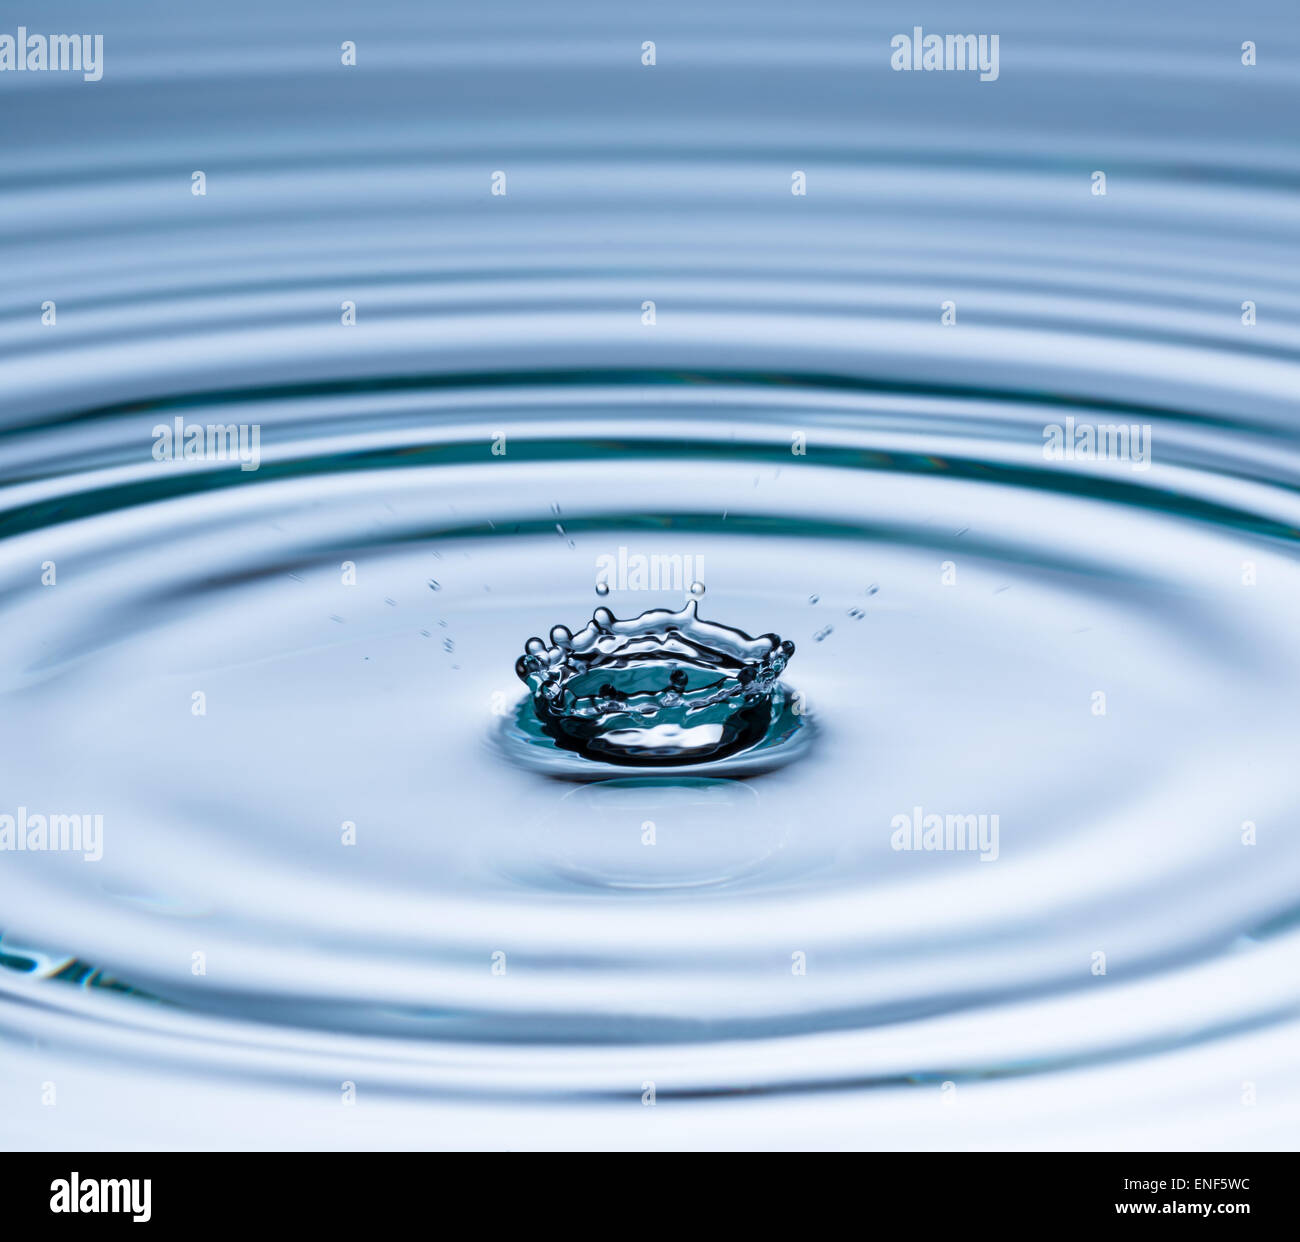 Gota de agua que cae en la superficie del agua, macro fotografía Foto de stock